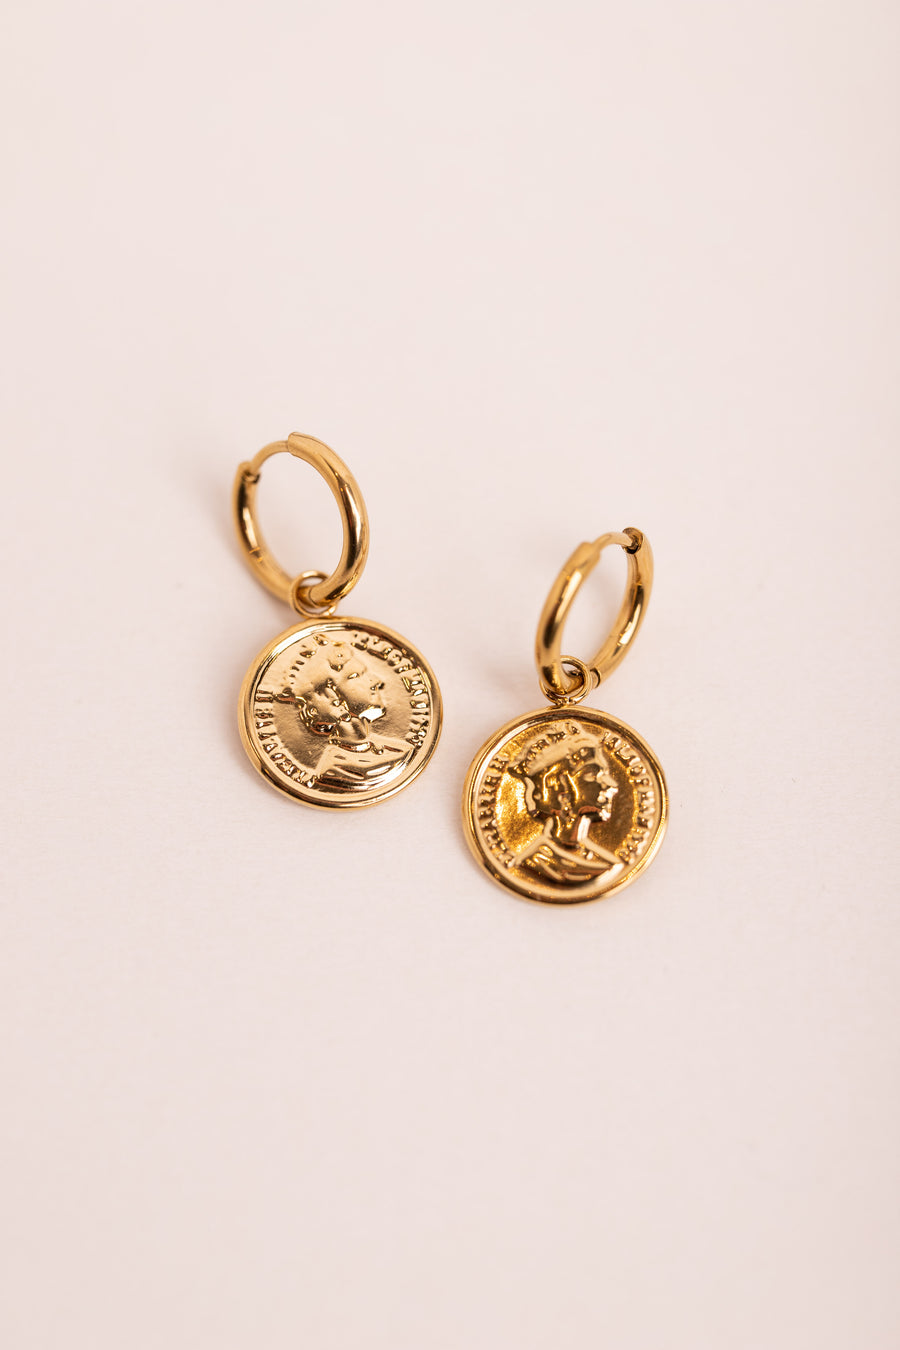 jackieandkate Ohrringe Münzen gold